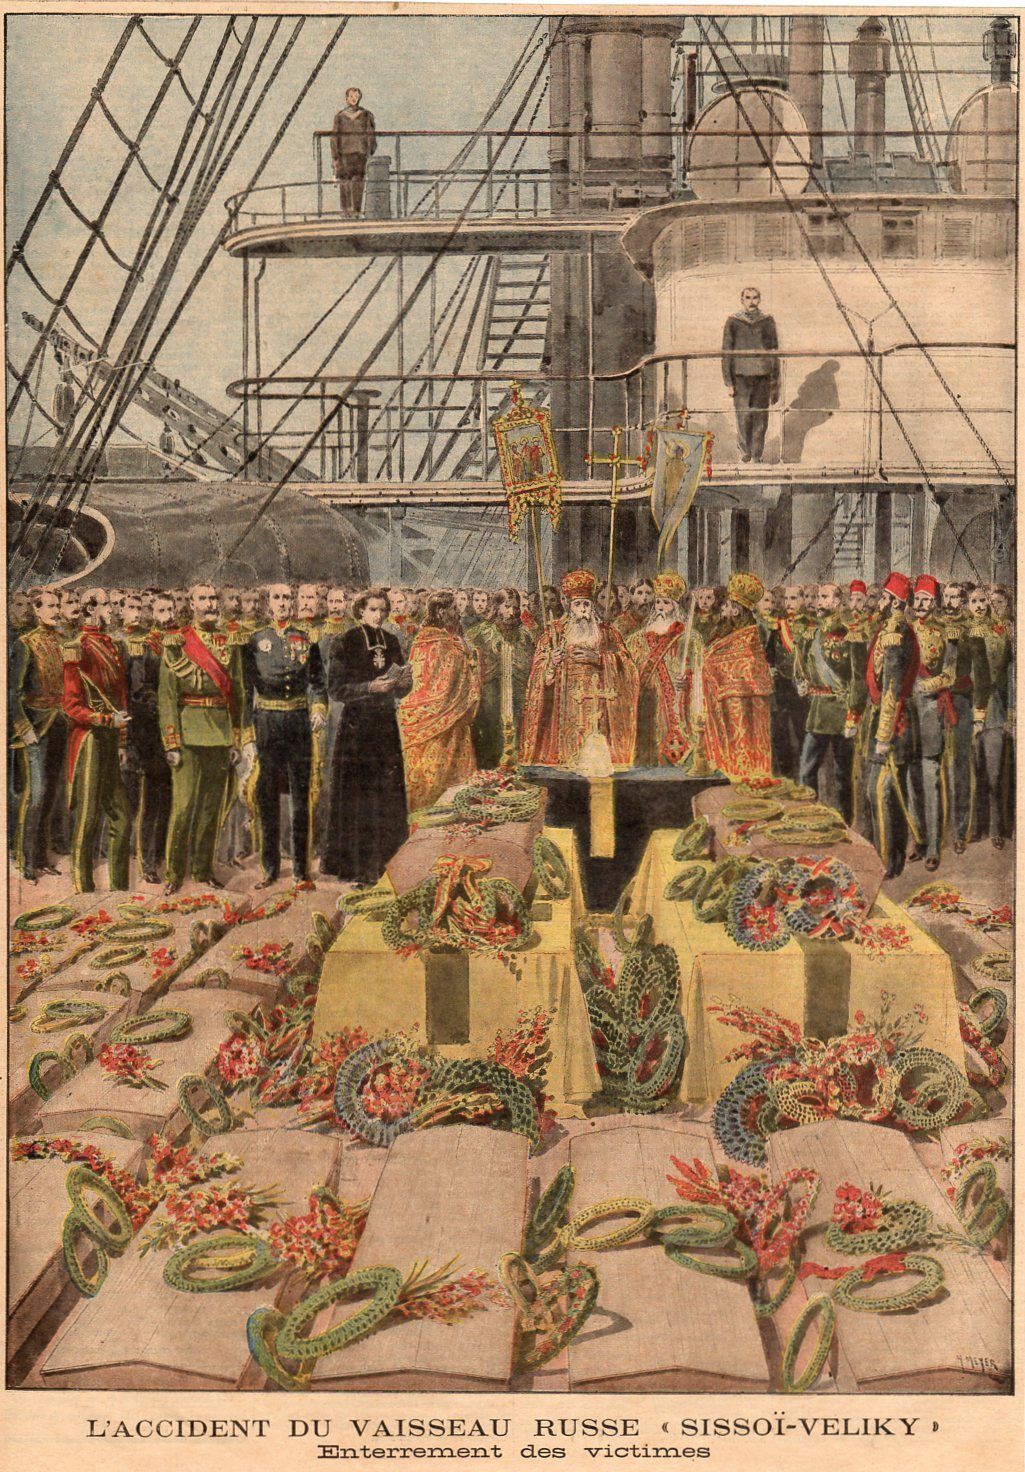 burial-of-russian-seamen-sissoi-veliky-crete-1897.jpg